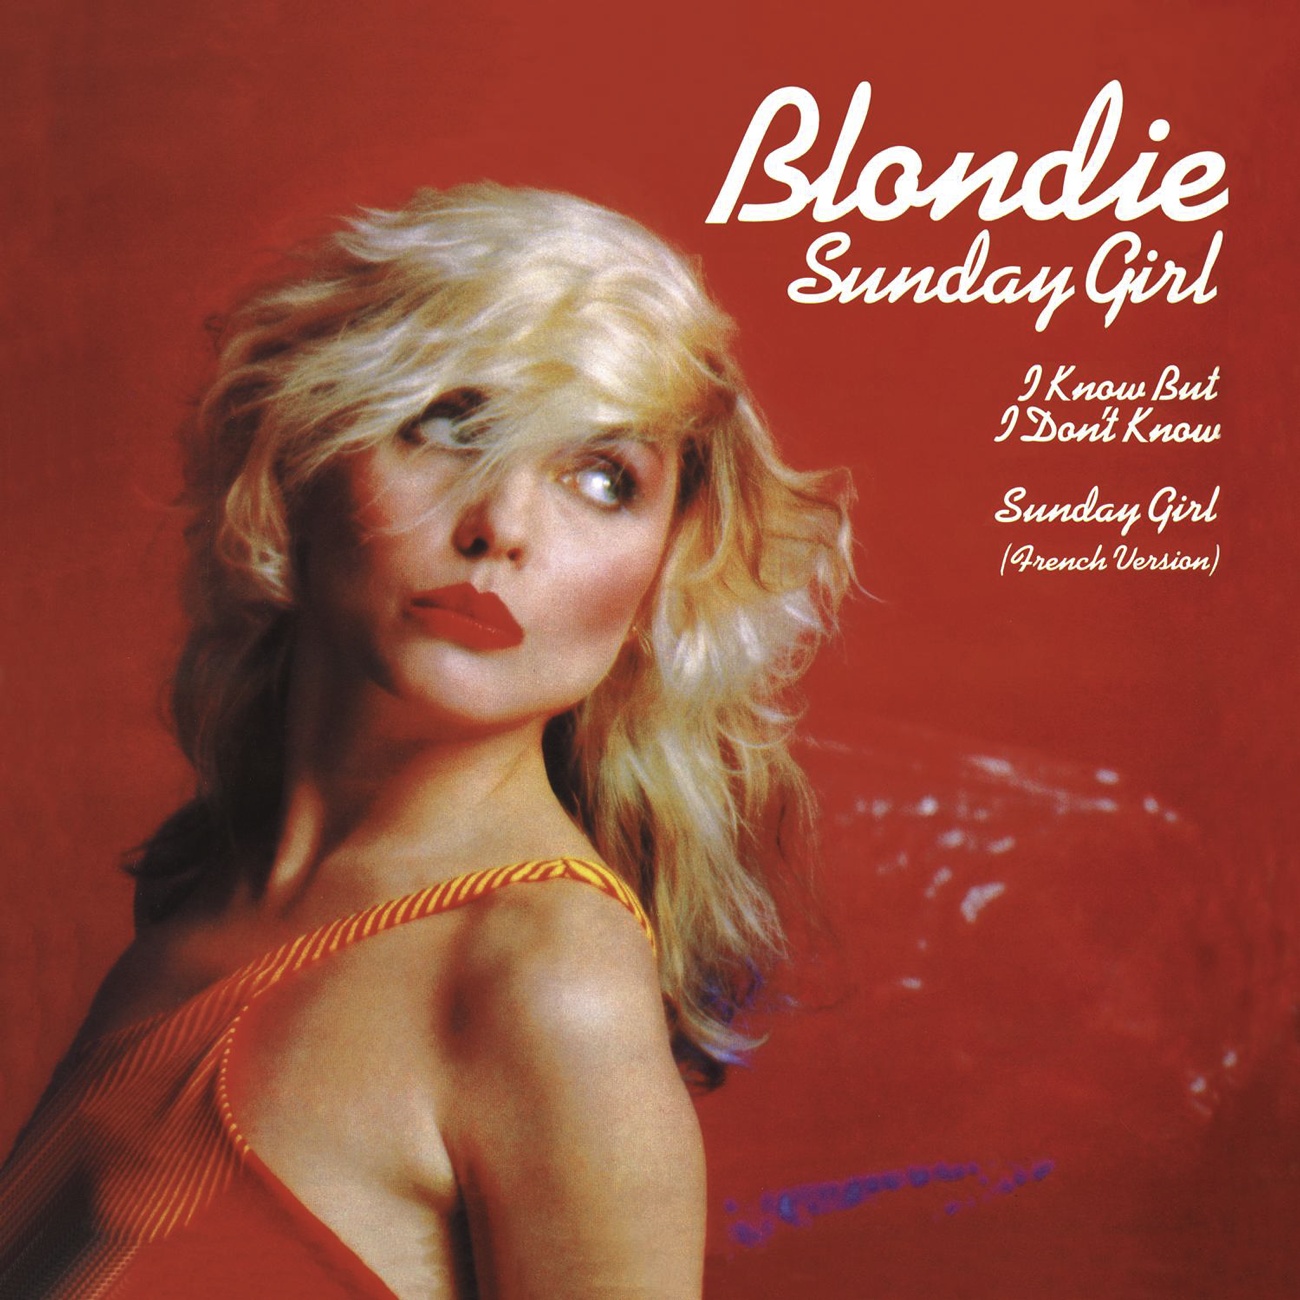 Sunday Girl (French Version) (1993 Digital Remaster)